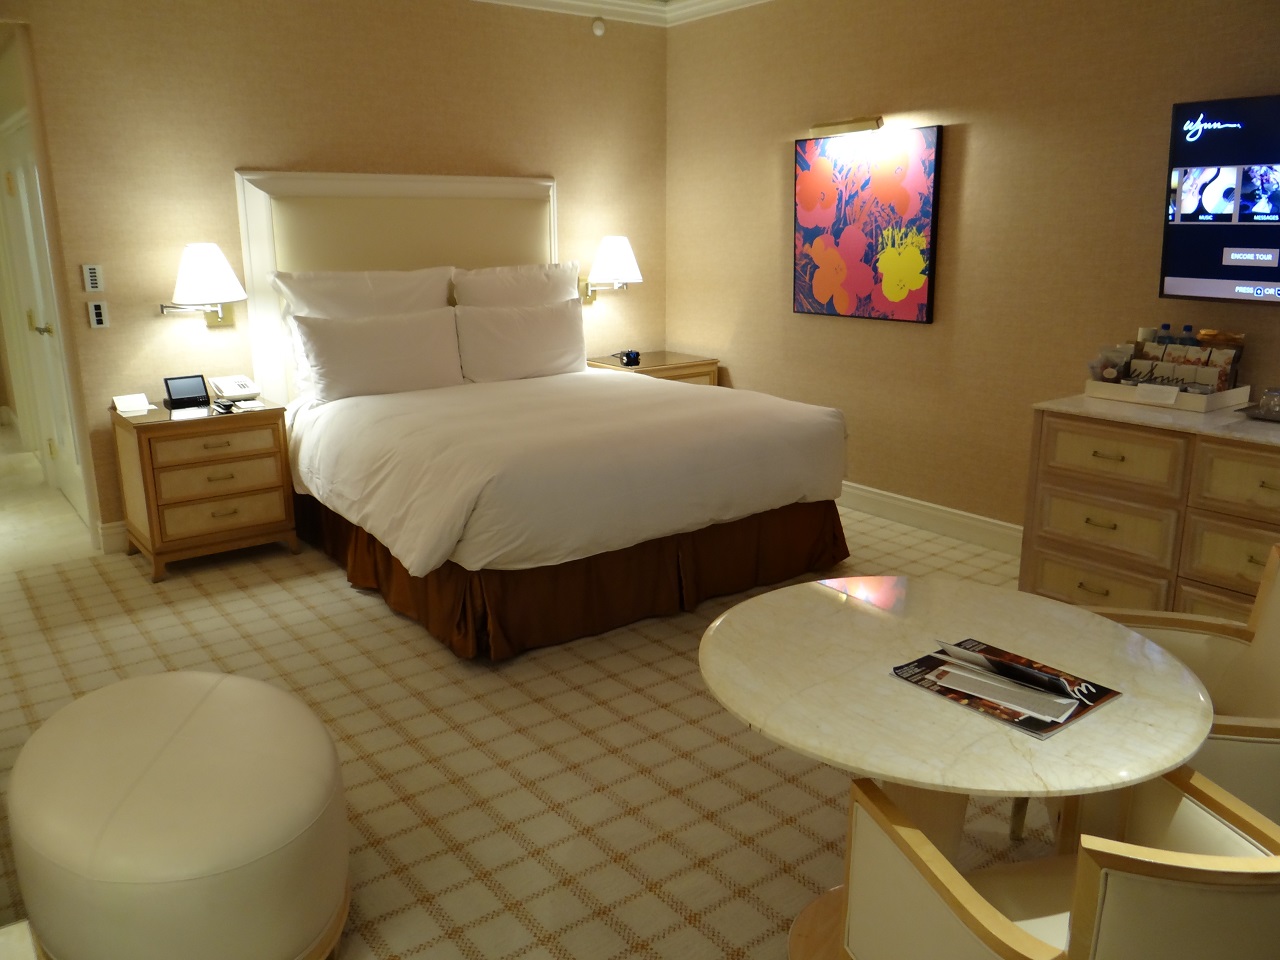 Rafflesia Arnoldi Marcha atrás Real Las Vegas: The Wynn Hotel Review - Luxury Food & Wine Stay - PhilaTravelGirl